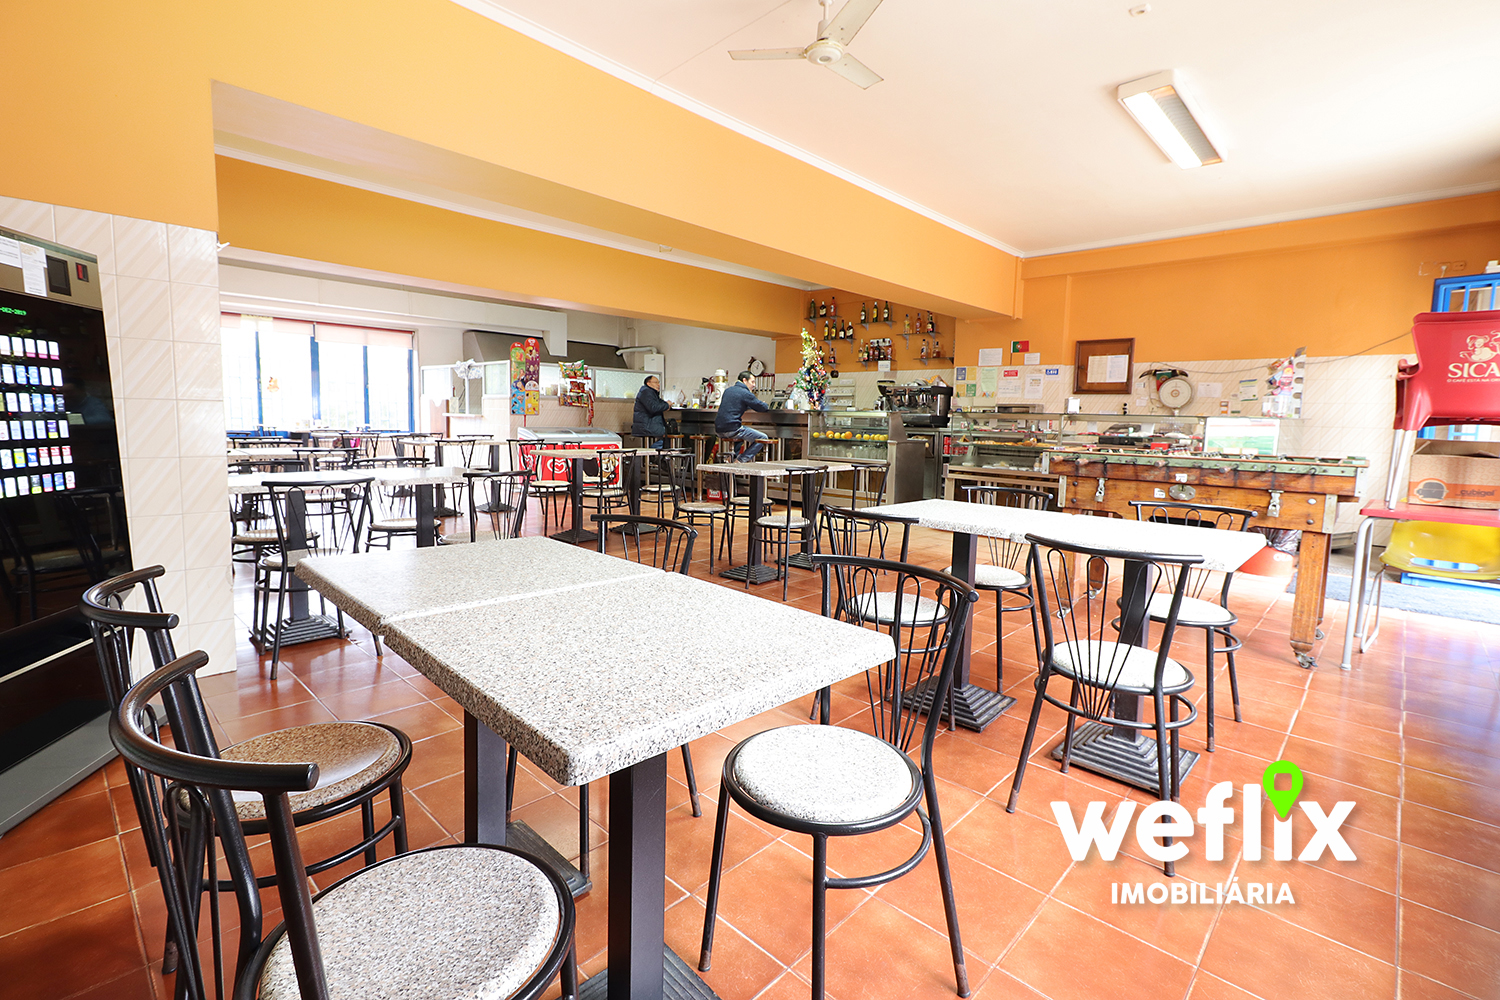 cafe restaurante loja escritorio comercio massama - weflix imobiliaria 3